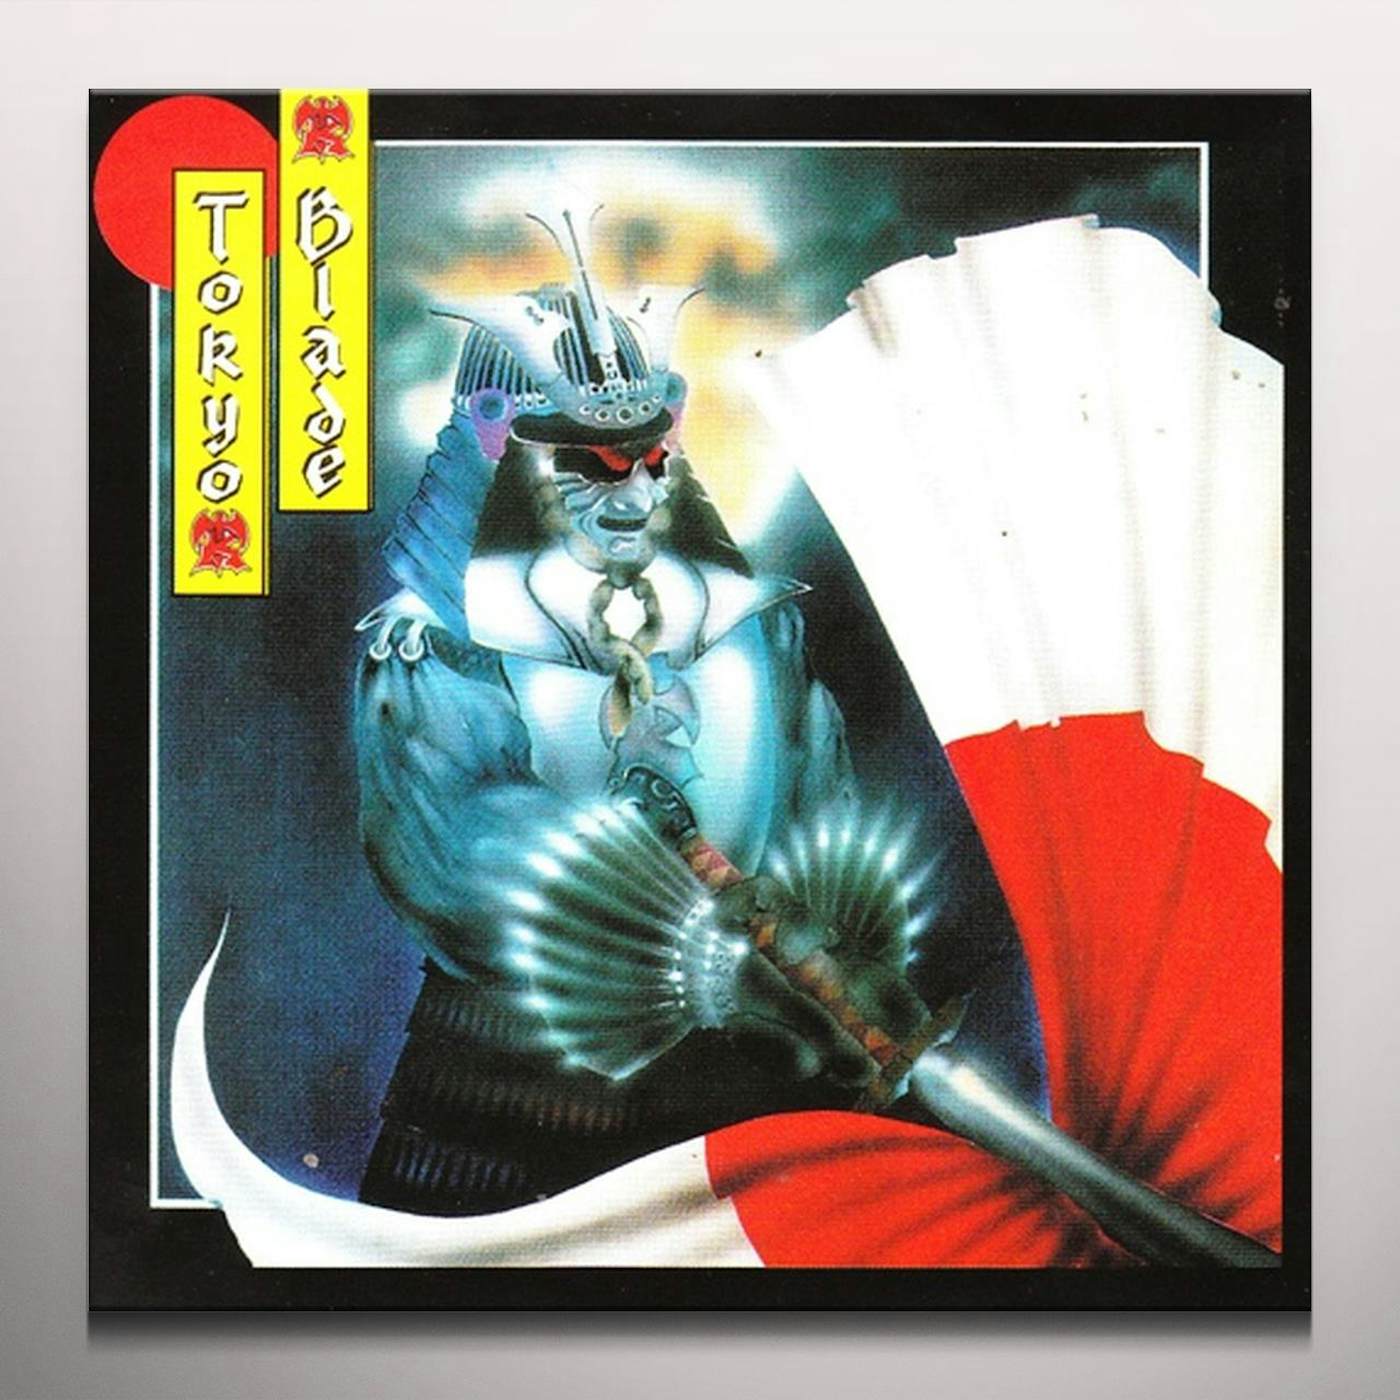 Tokyo Blade NIGHT OF THE BLADE Vinyl Record - Reissue, Colored Vinyl